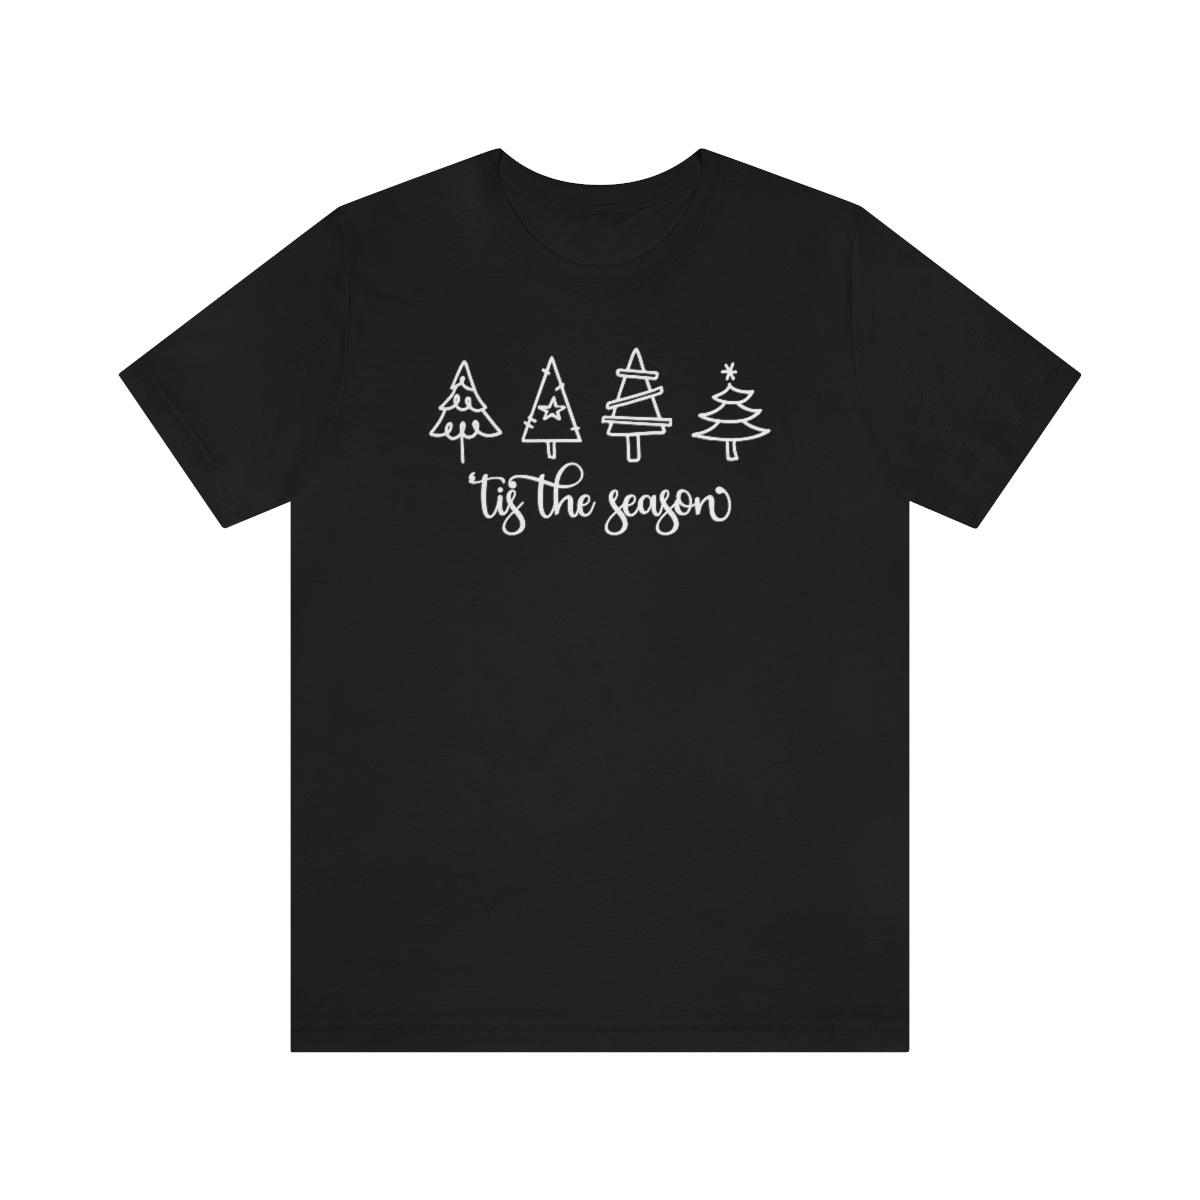 Tis The Season Trees Christmas Shirt Short Sleeve Tee